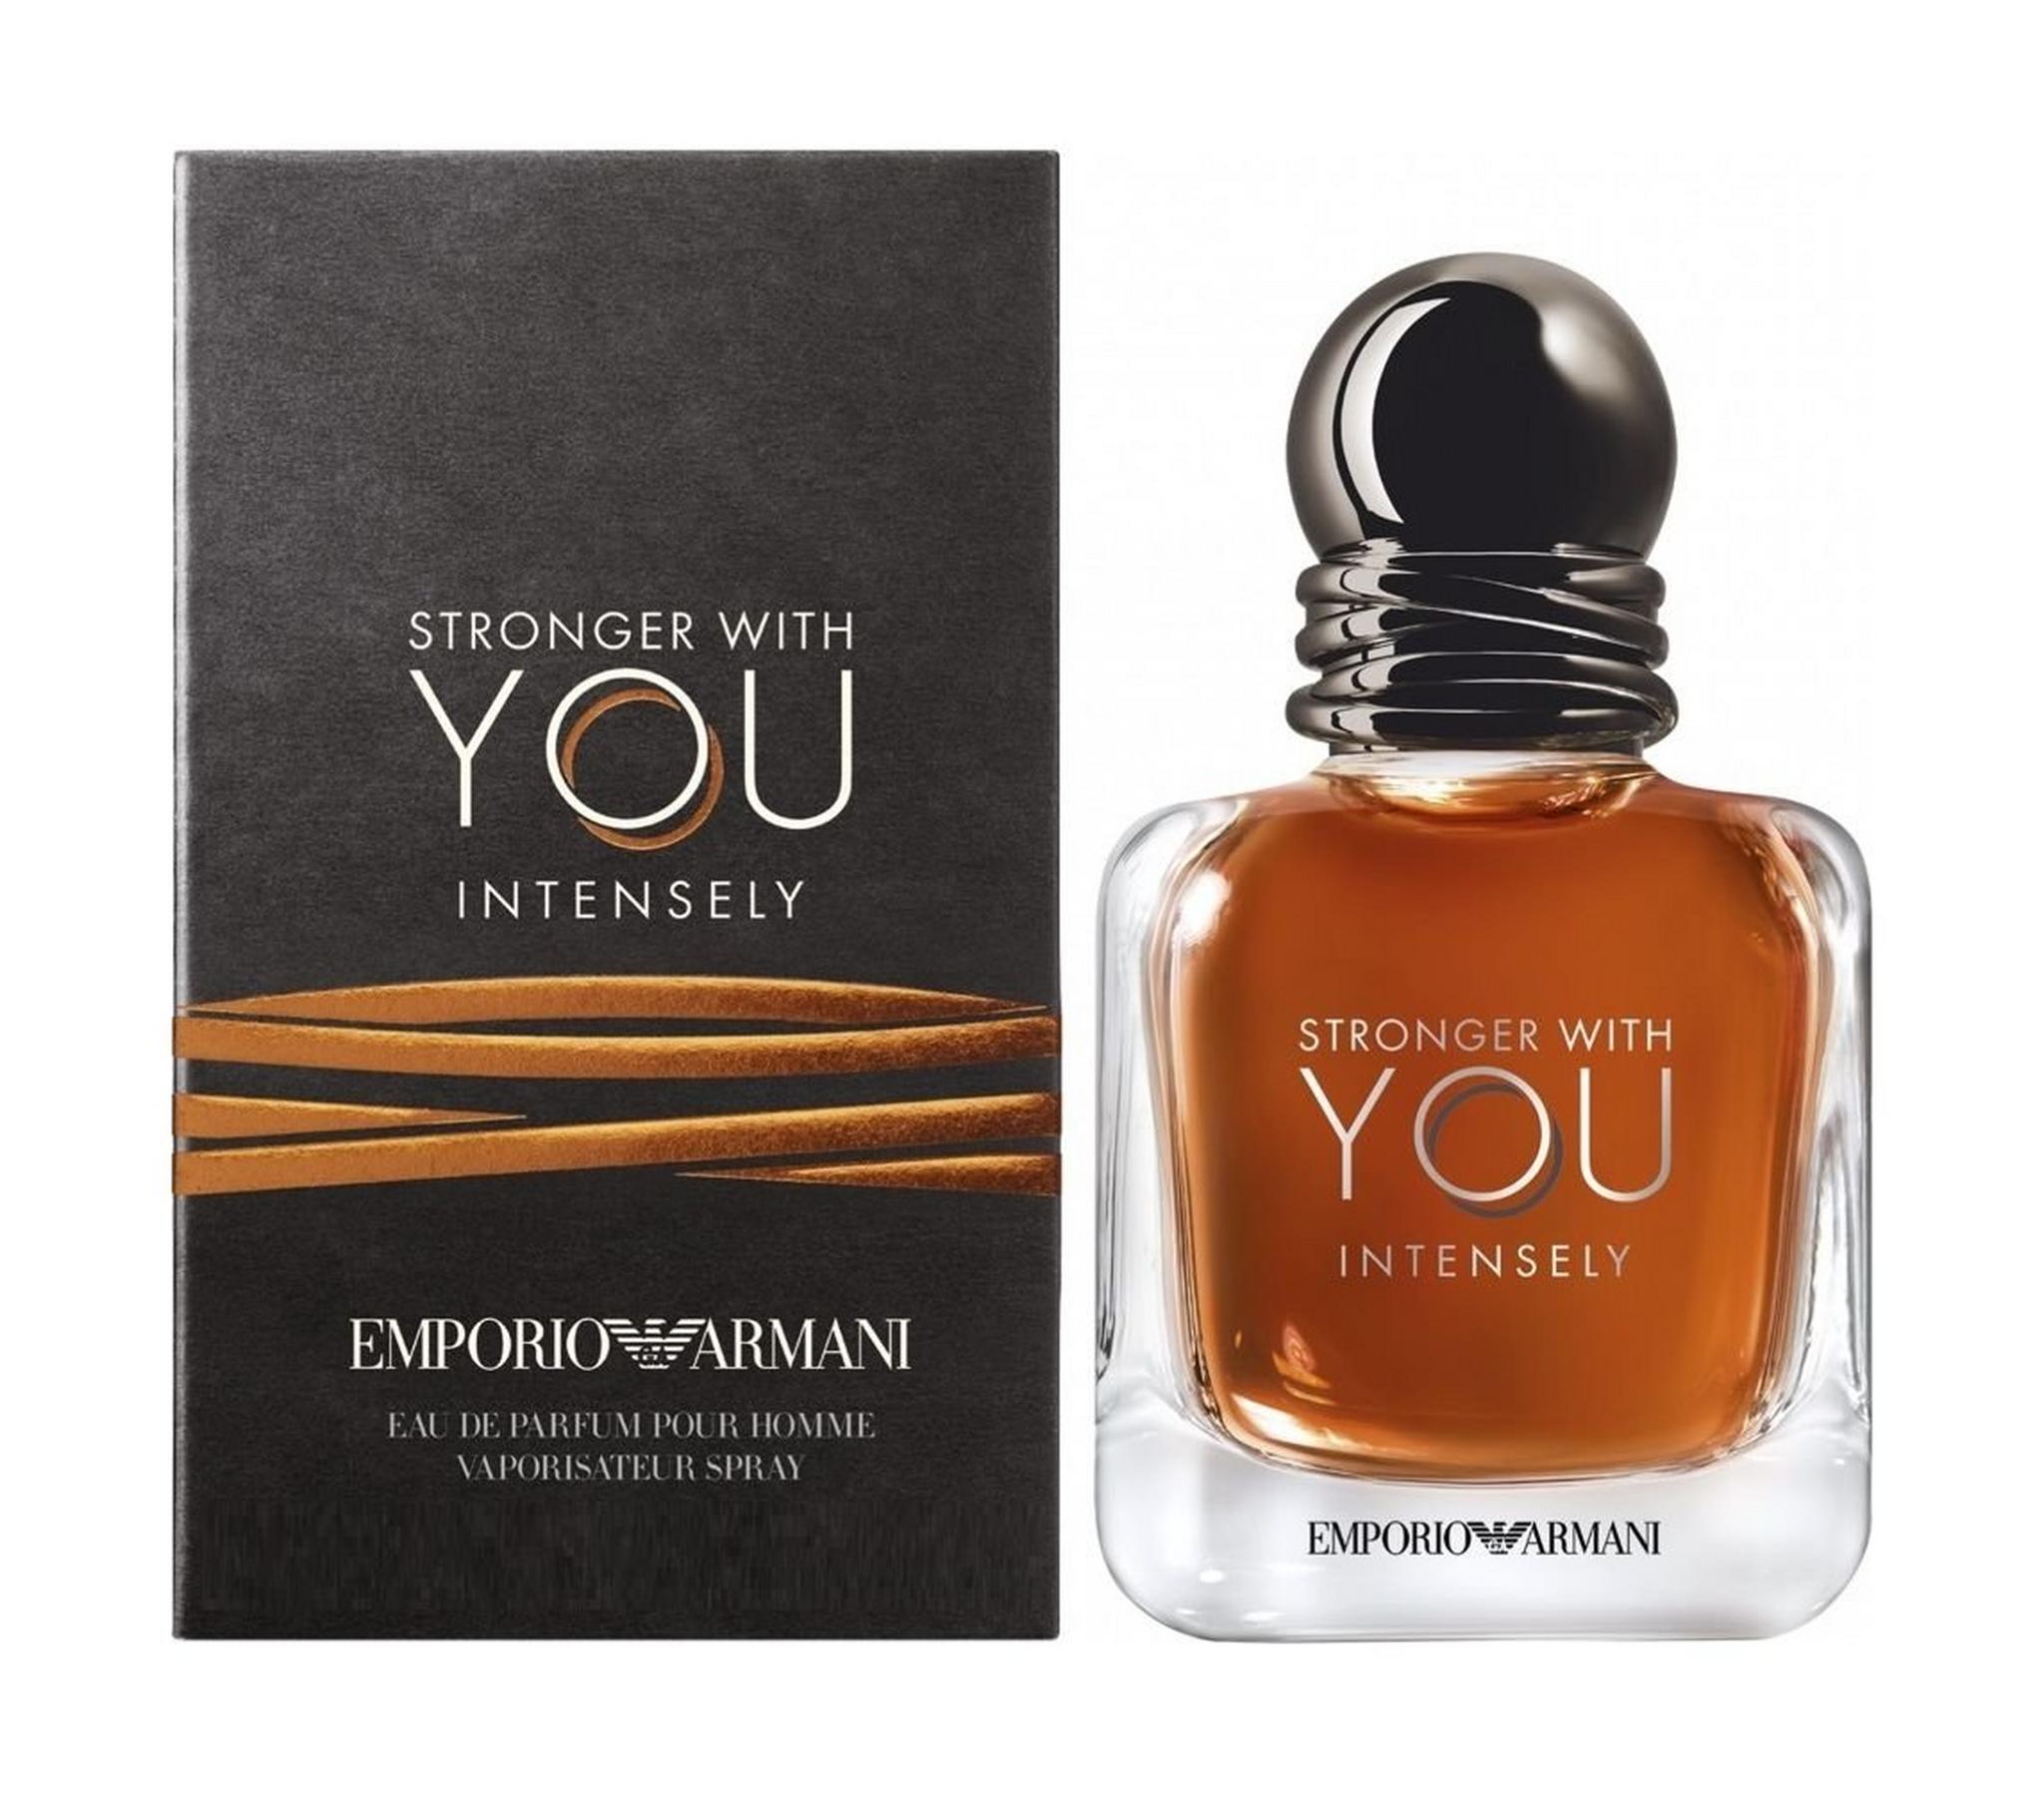 Stronger with You Intensely by Emporio Armani for Men Eau de Parfum 100 ML.